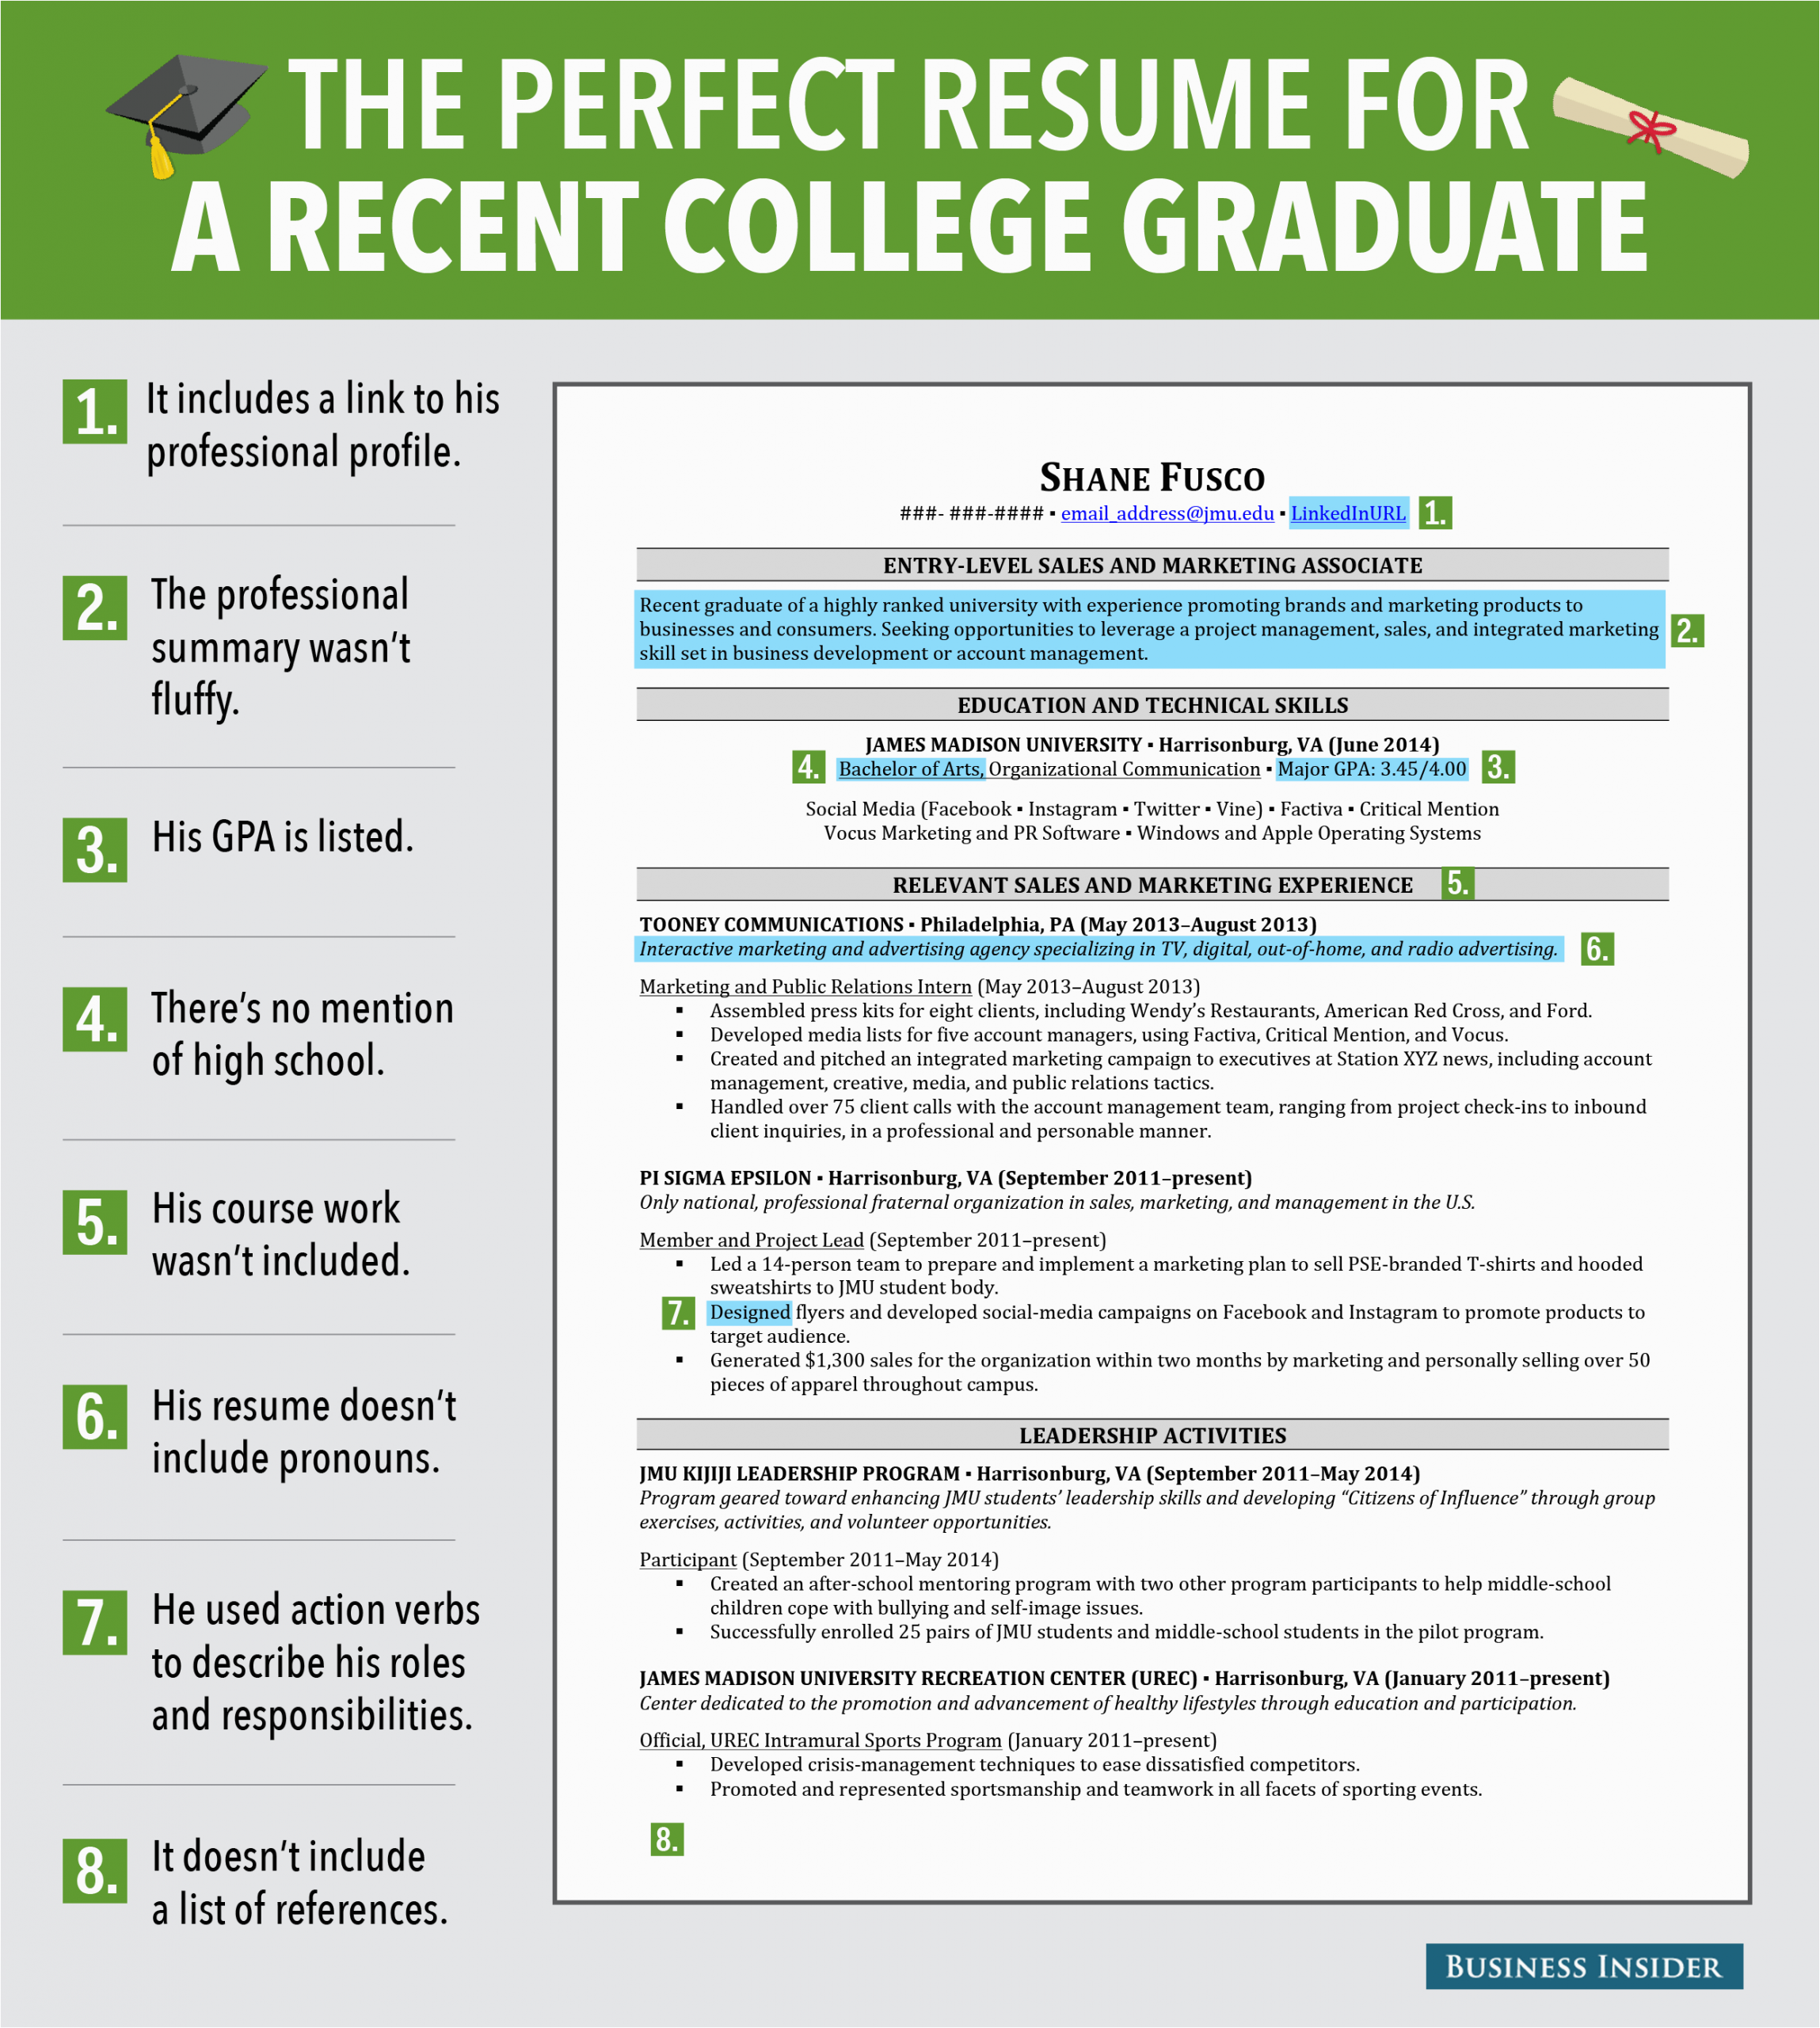 Sample Resume for New College Graduate Excellent Resume for Recent Grad Business Insider